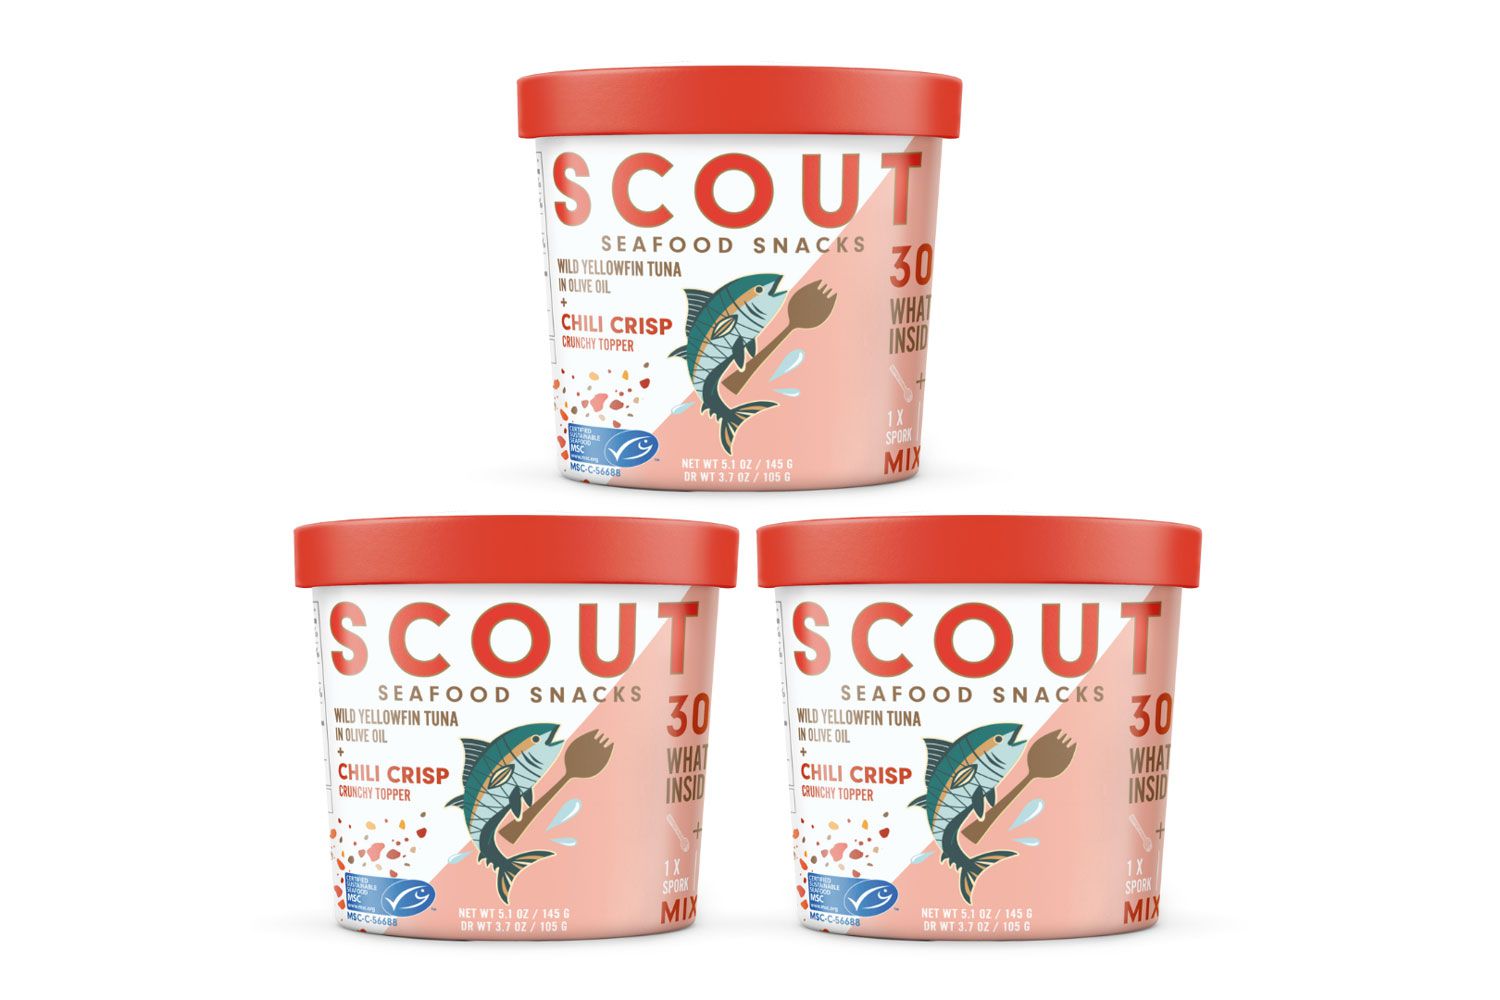 Scout Seafood Snacks Chili Crisp